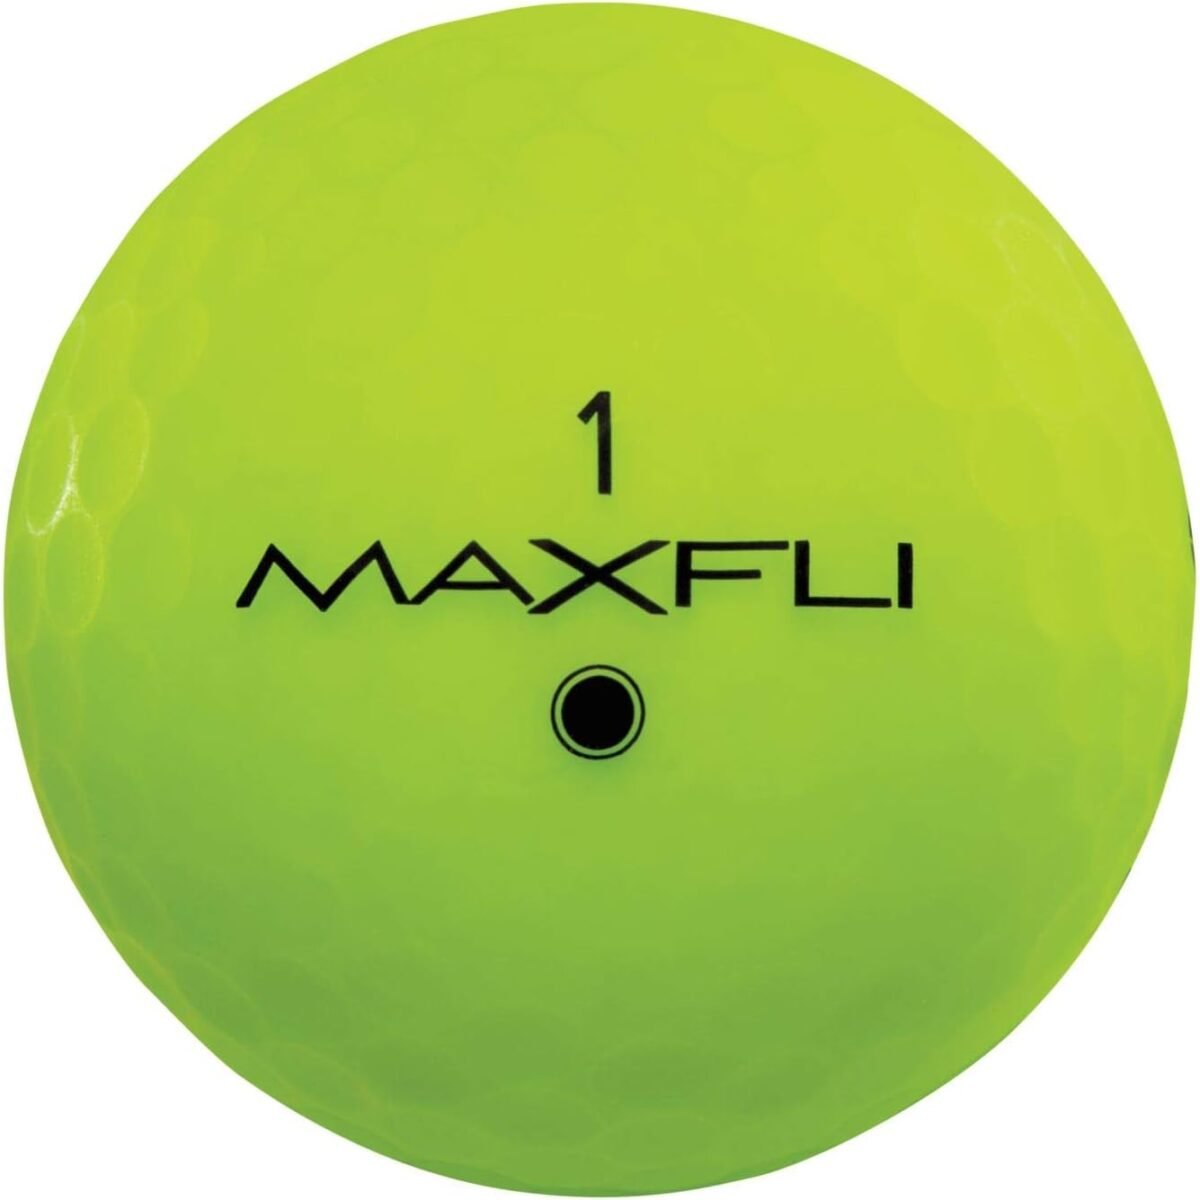 Comparing 4 Top Golf Balls: Maxfli, Bridgestone, Diawings, and Callaway